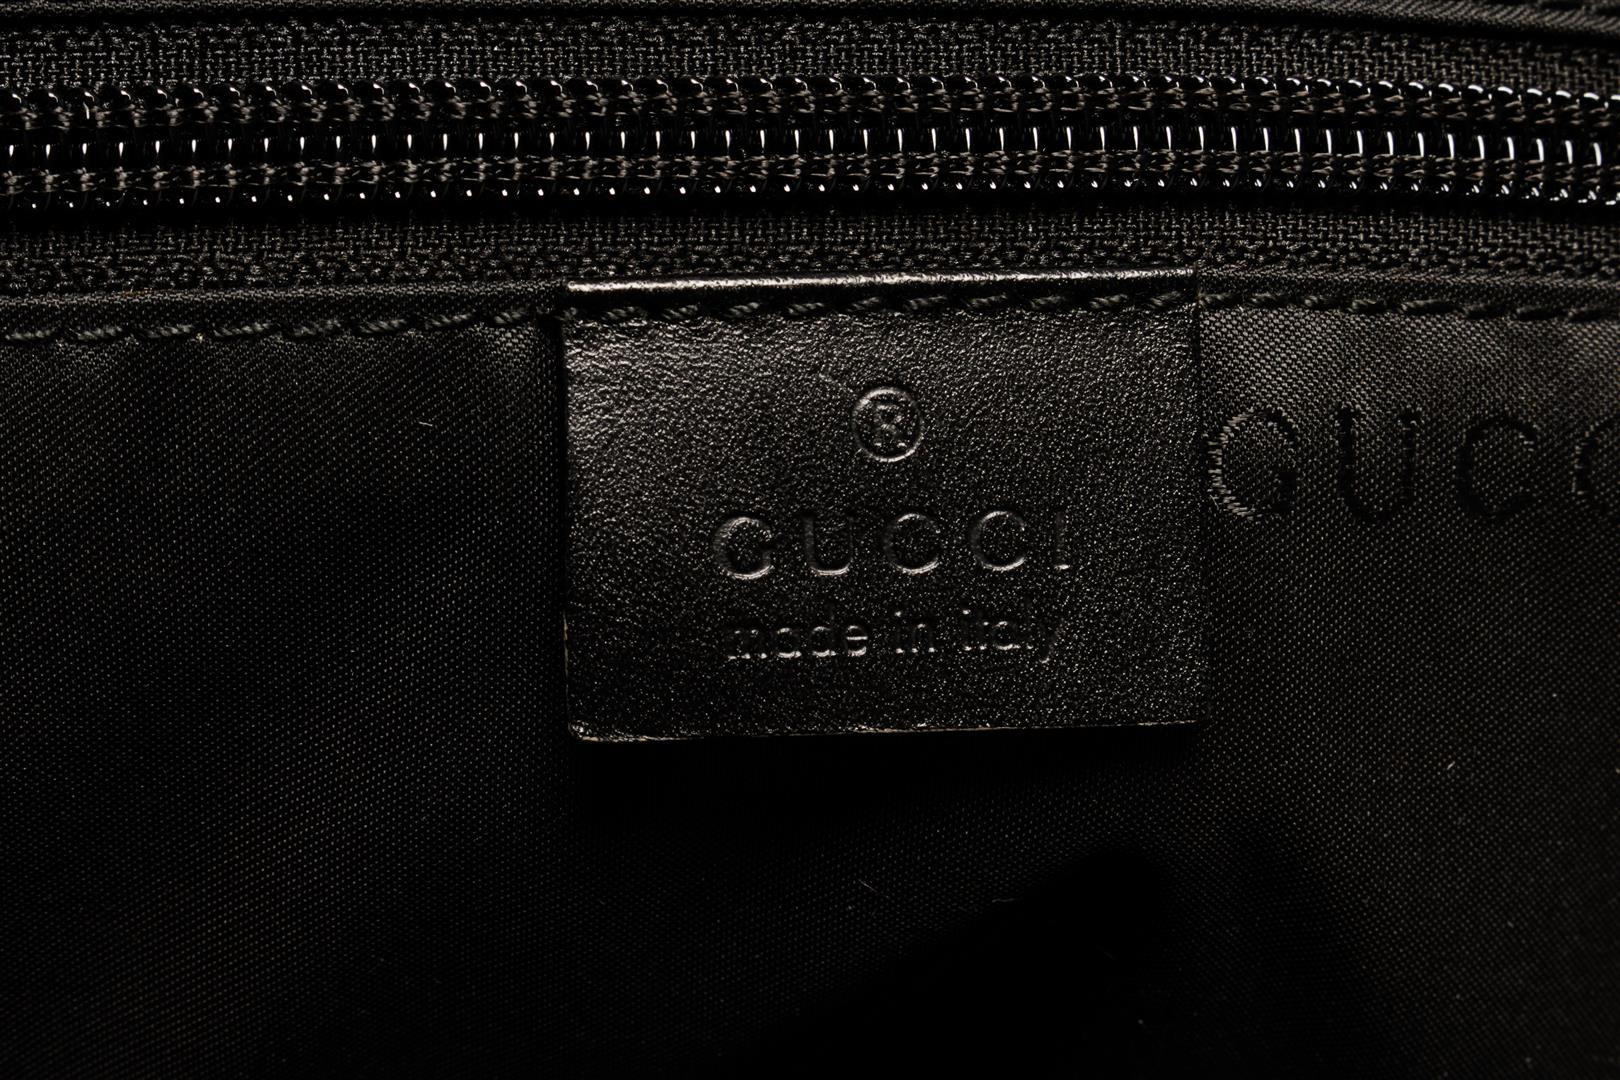 Gucci Black Boston Bag